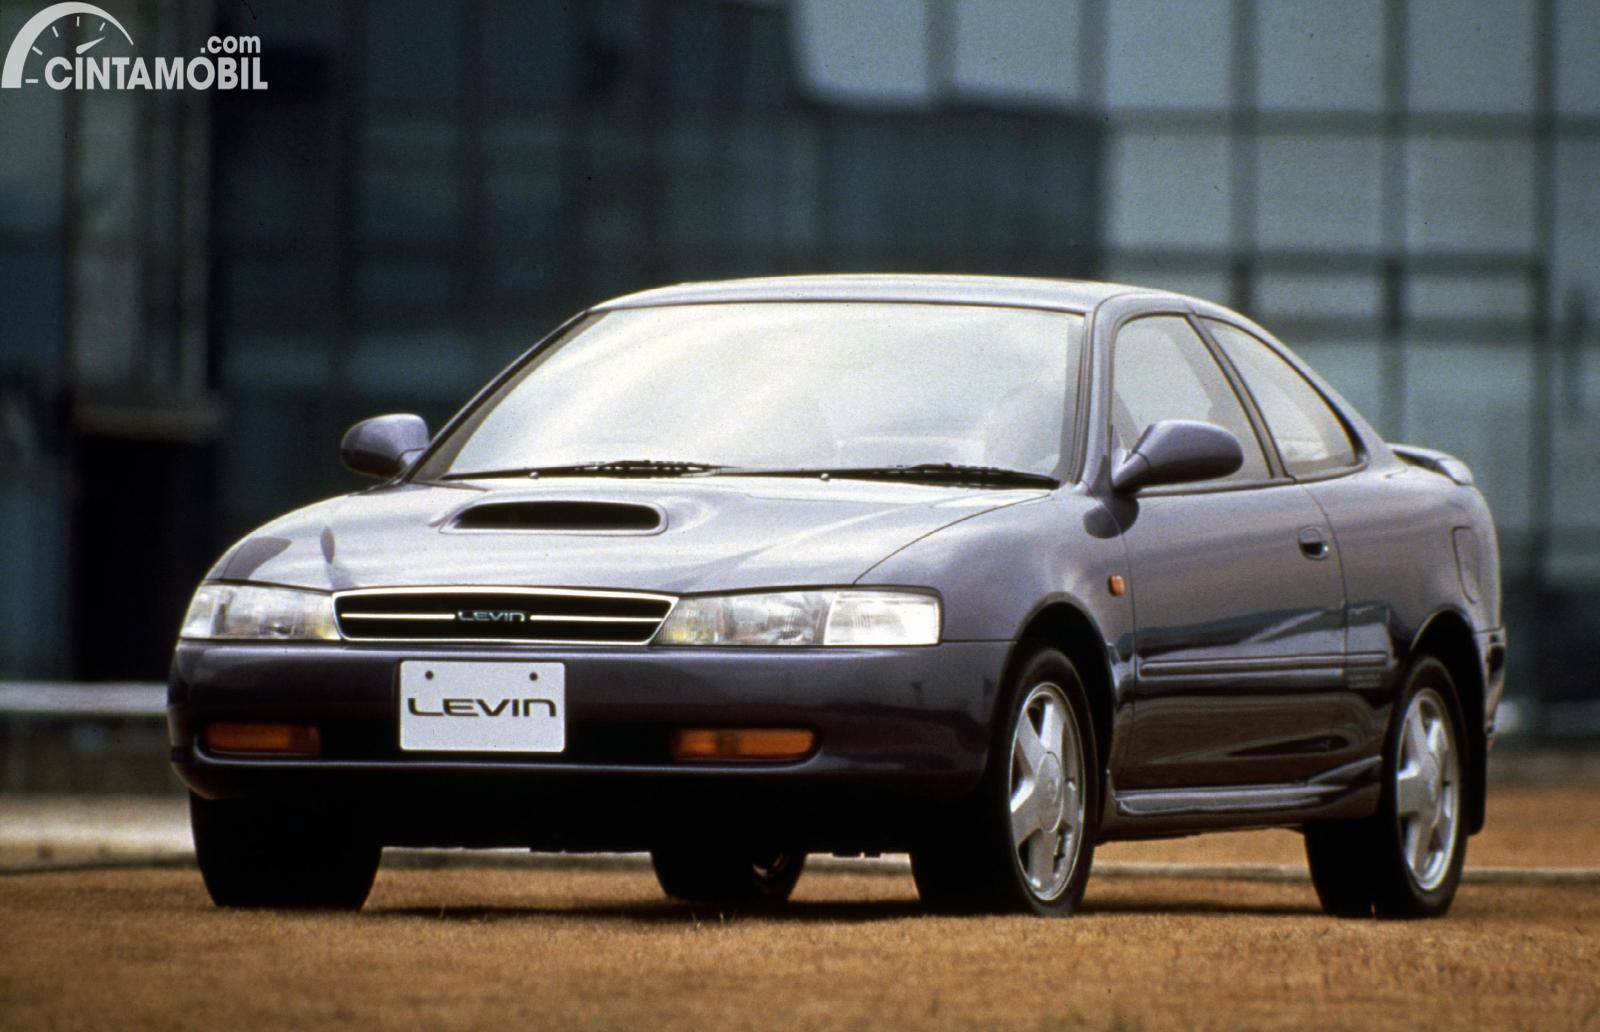 Mengenal Sejarah Toyota Corolla 2 Pintu Dijual di Seluruh